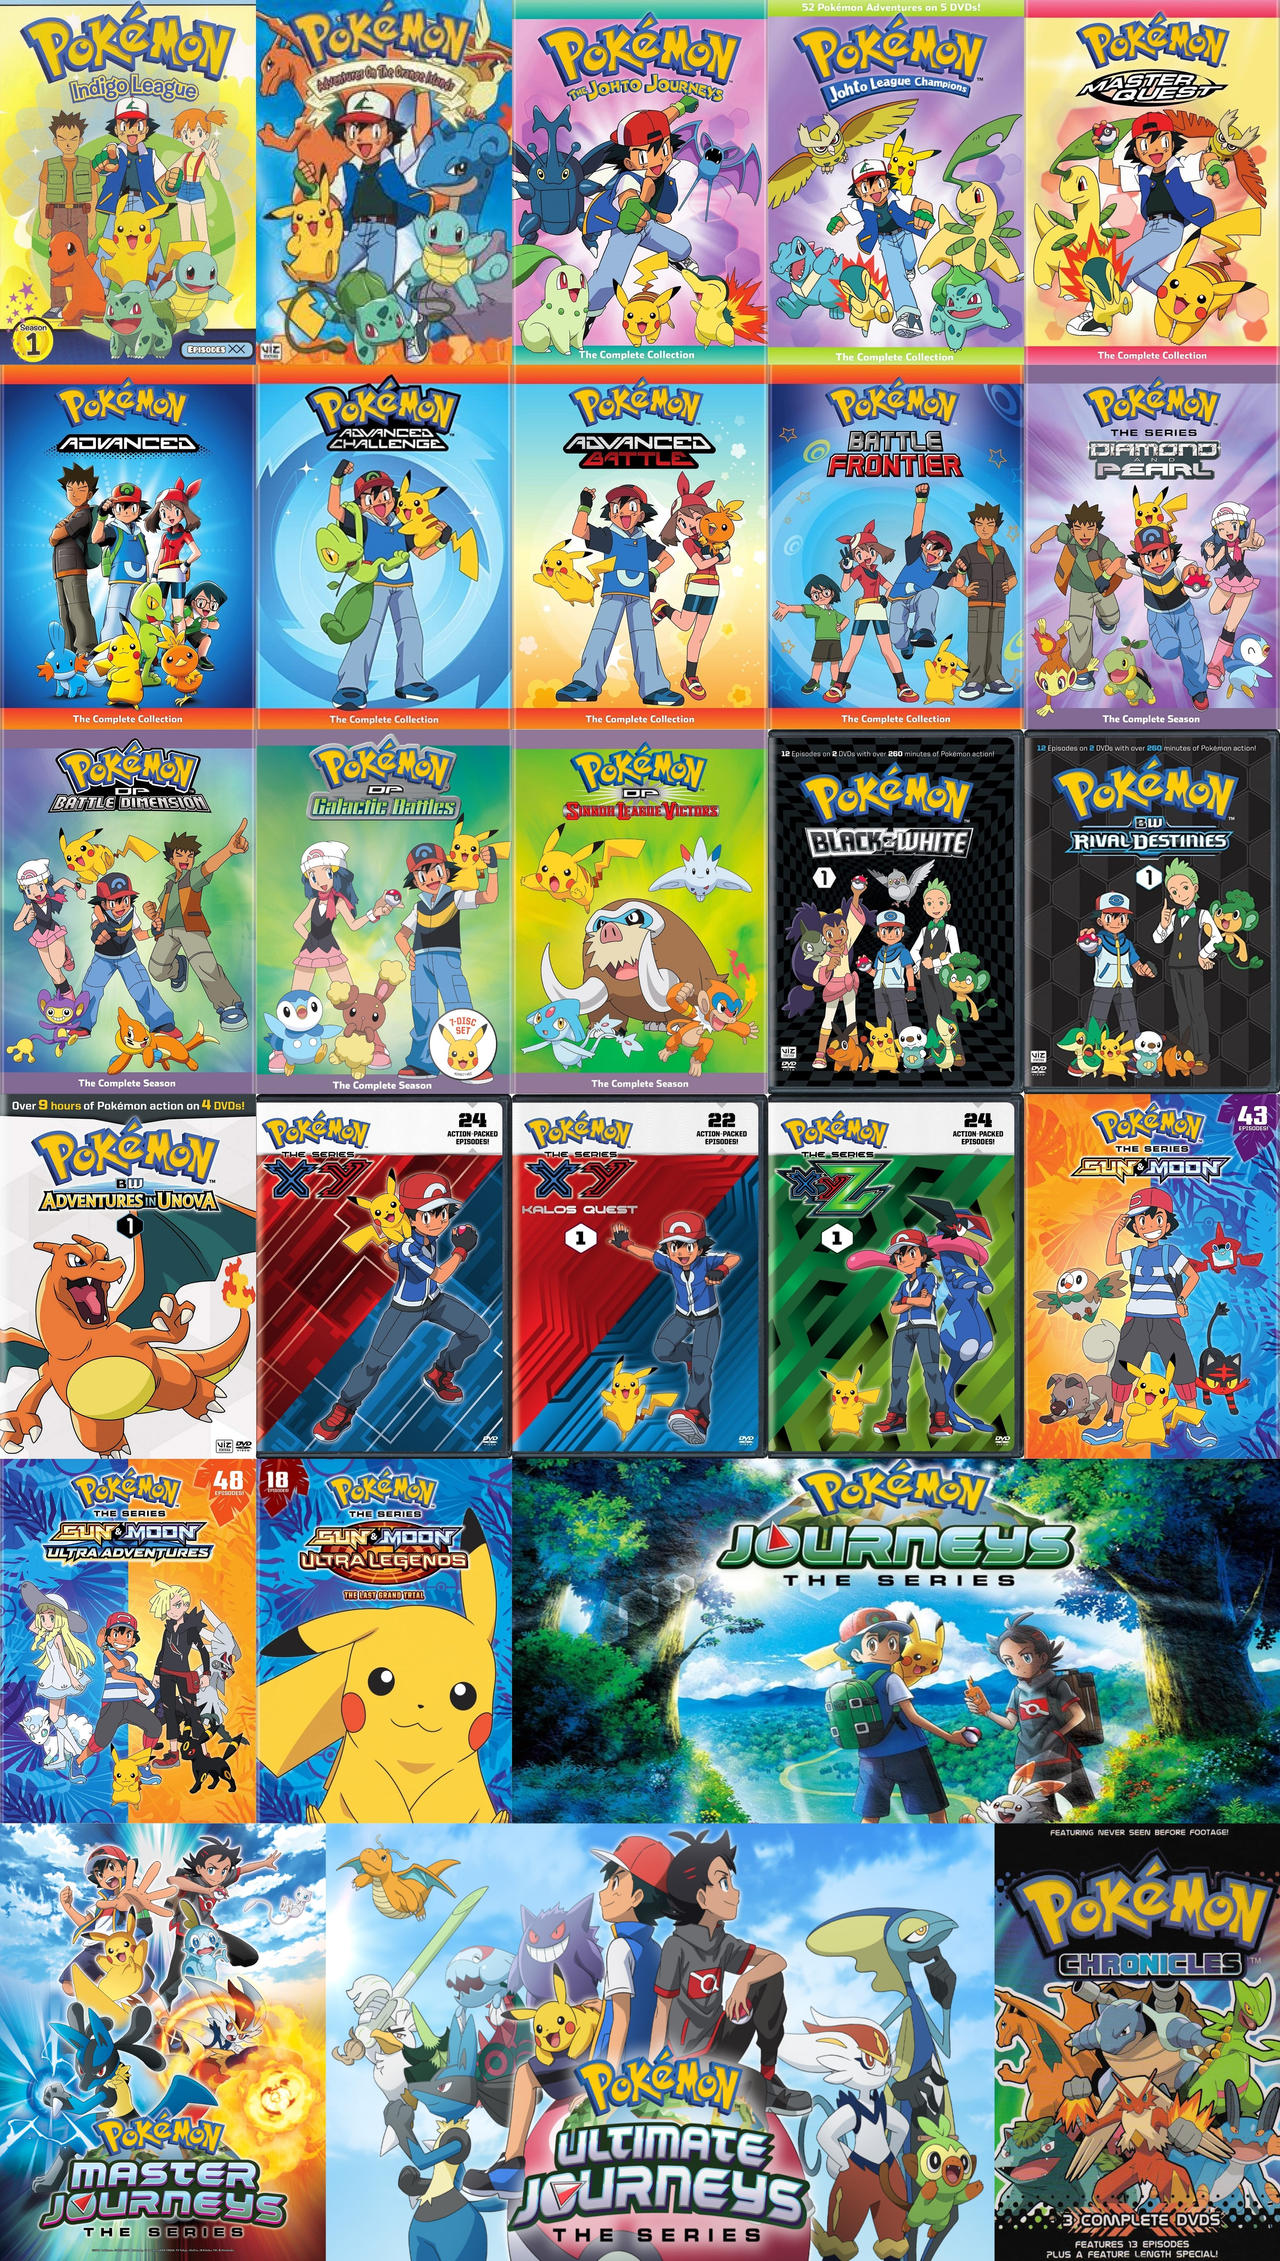 The Complete Pokemon Anime series by Advanceshipper2021 on DeviantArt